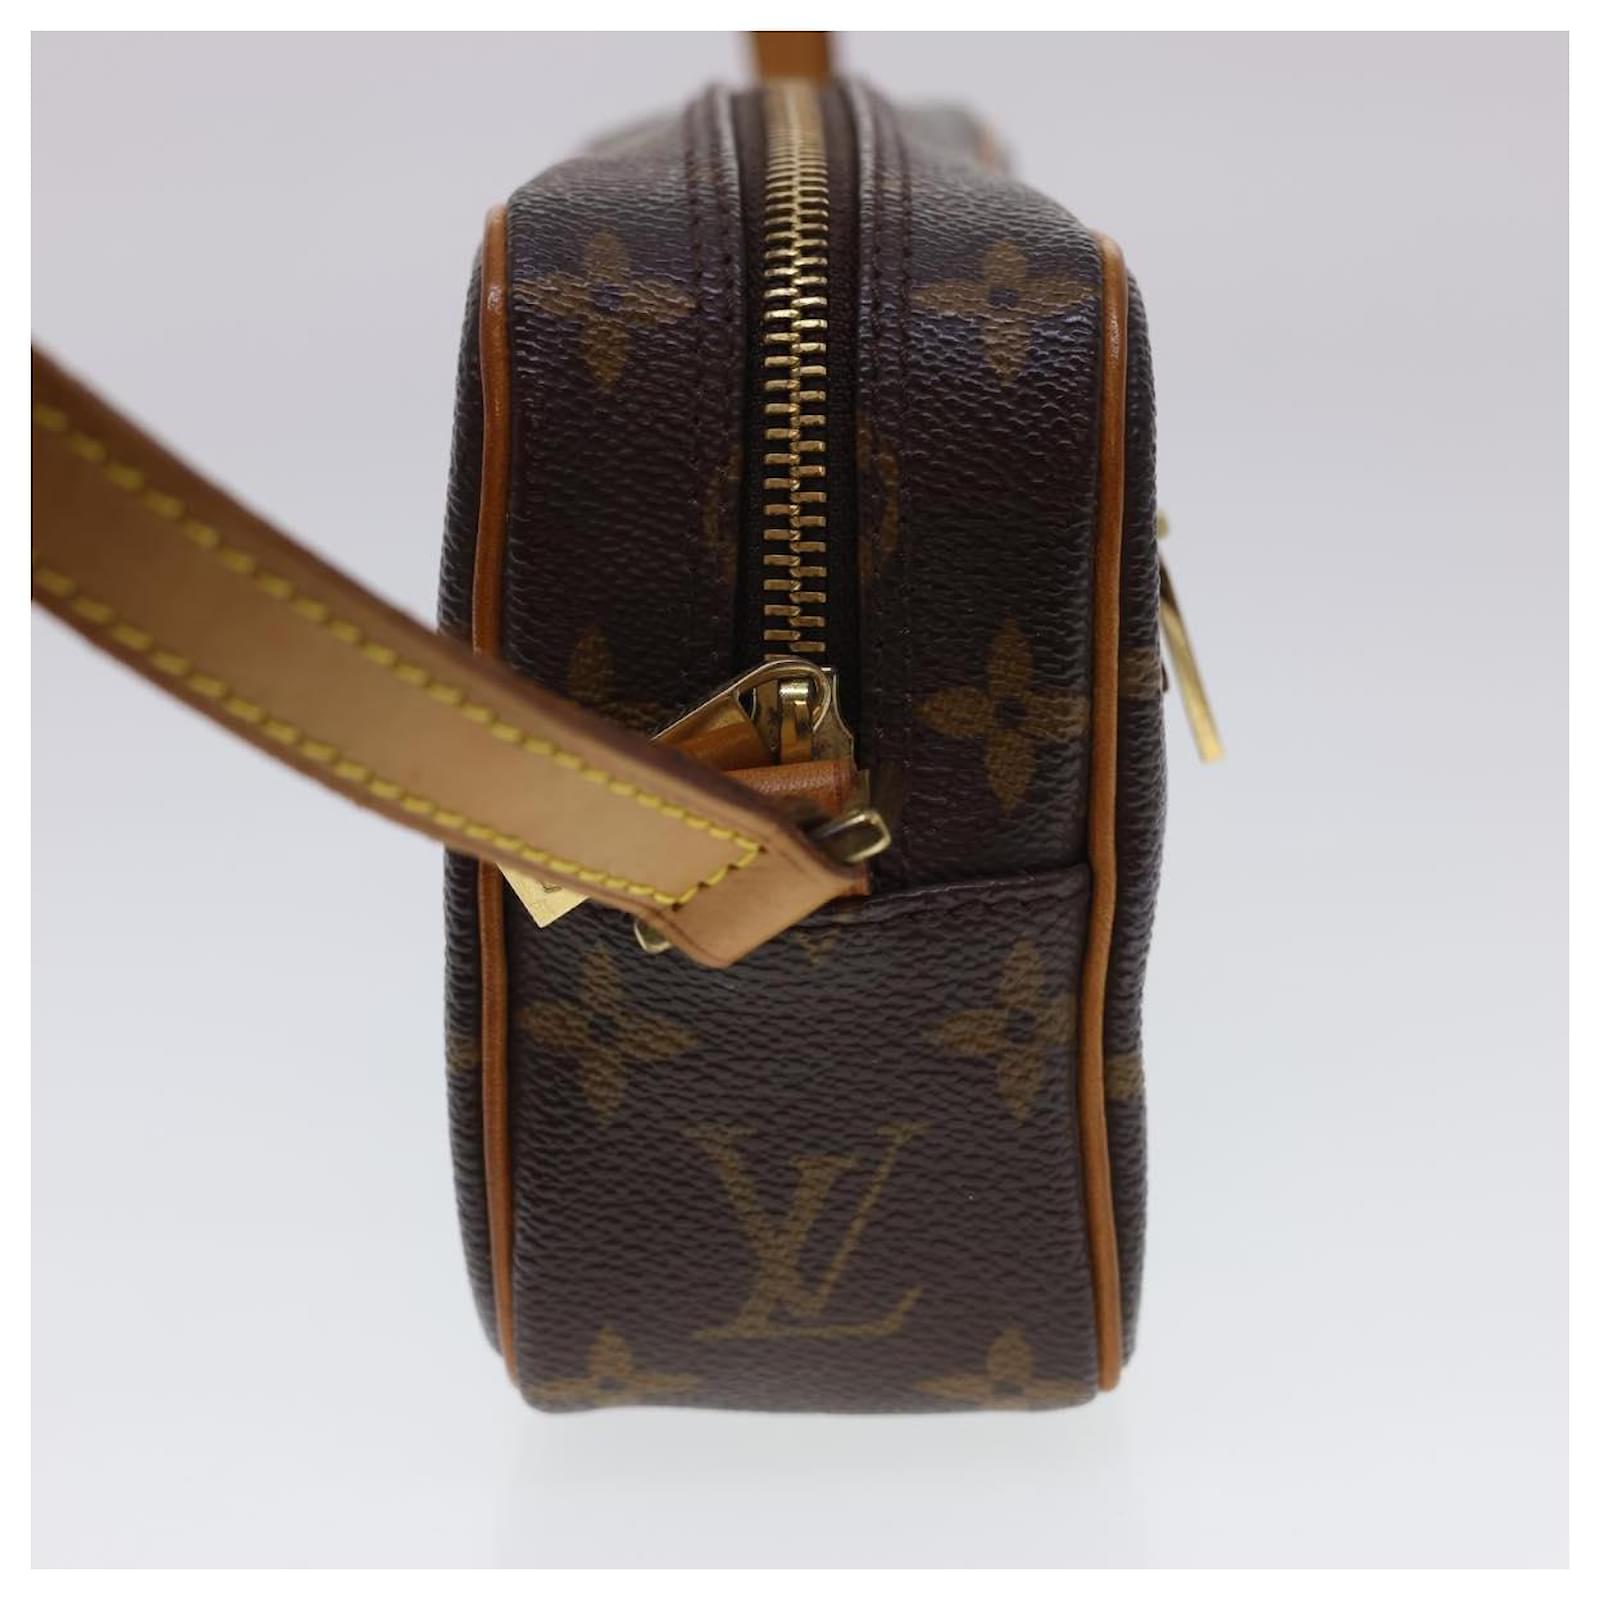 Louis Vuitton 𝗣𝗢𝗖𝗛𝗘𝗧𝗧𝗘 𝗠𝗘𝗧𝗜𝗦 M44875 – I BAG